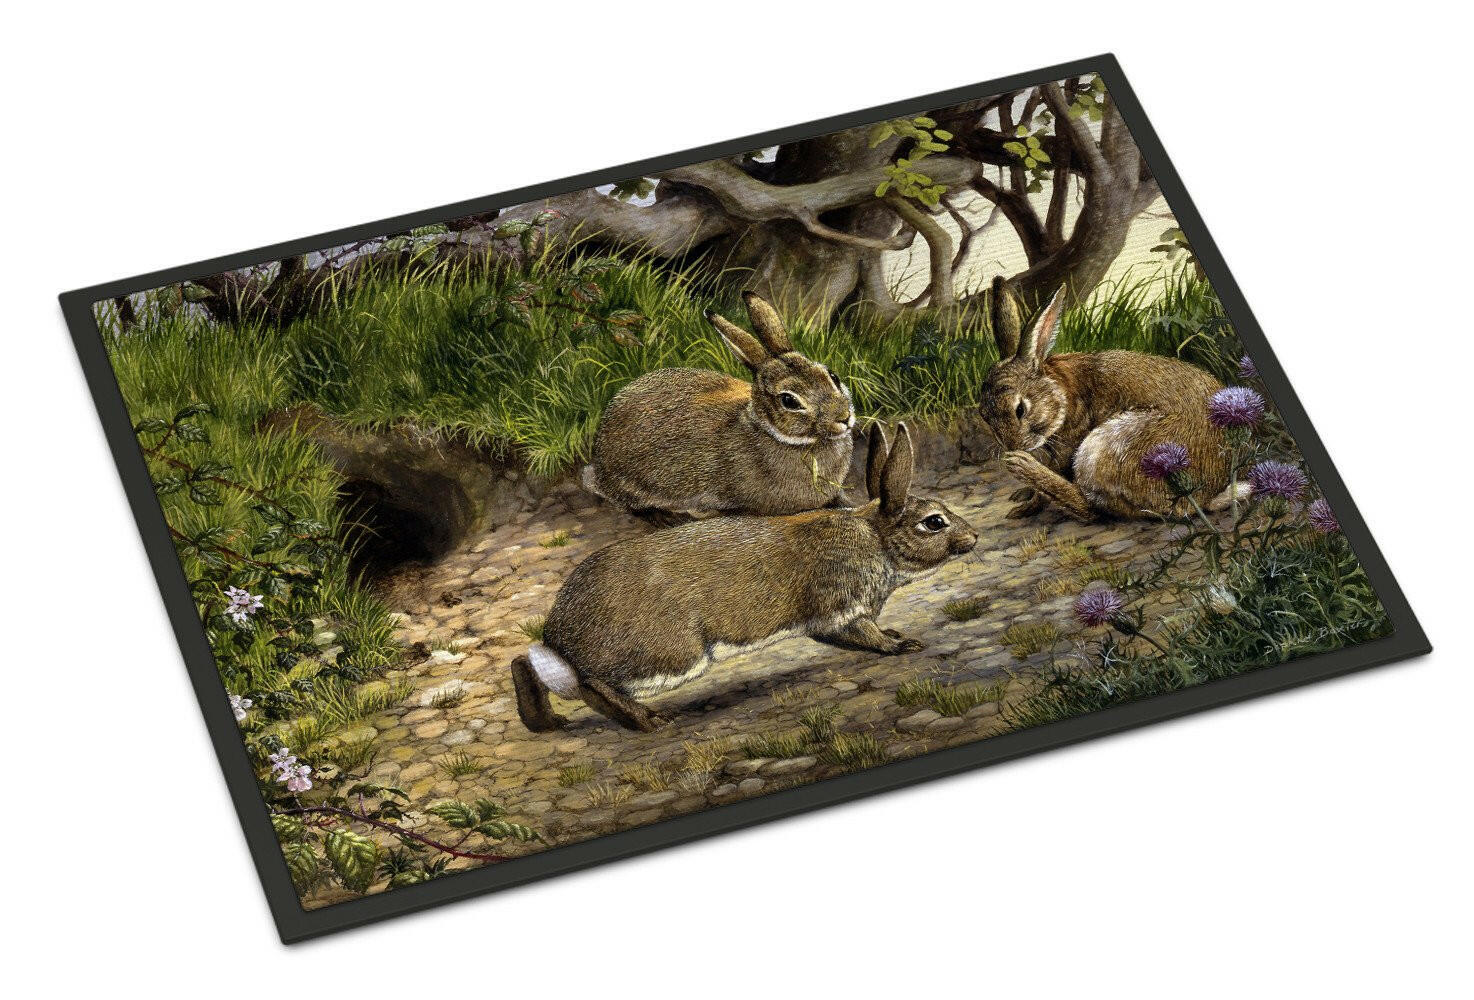 Rabbits and the Rabbit Hole Indoor or Outdoor Mat 18x27 BDBA0136MAT - the-store.com